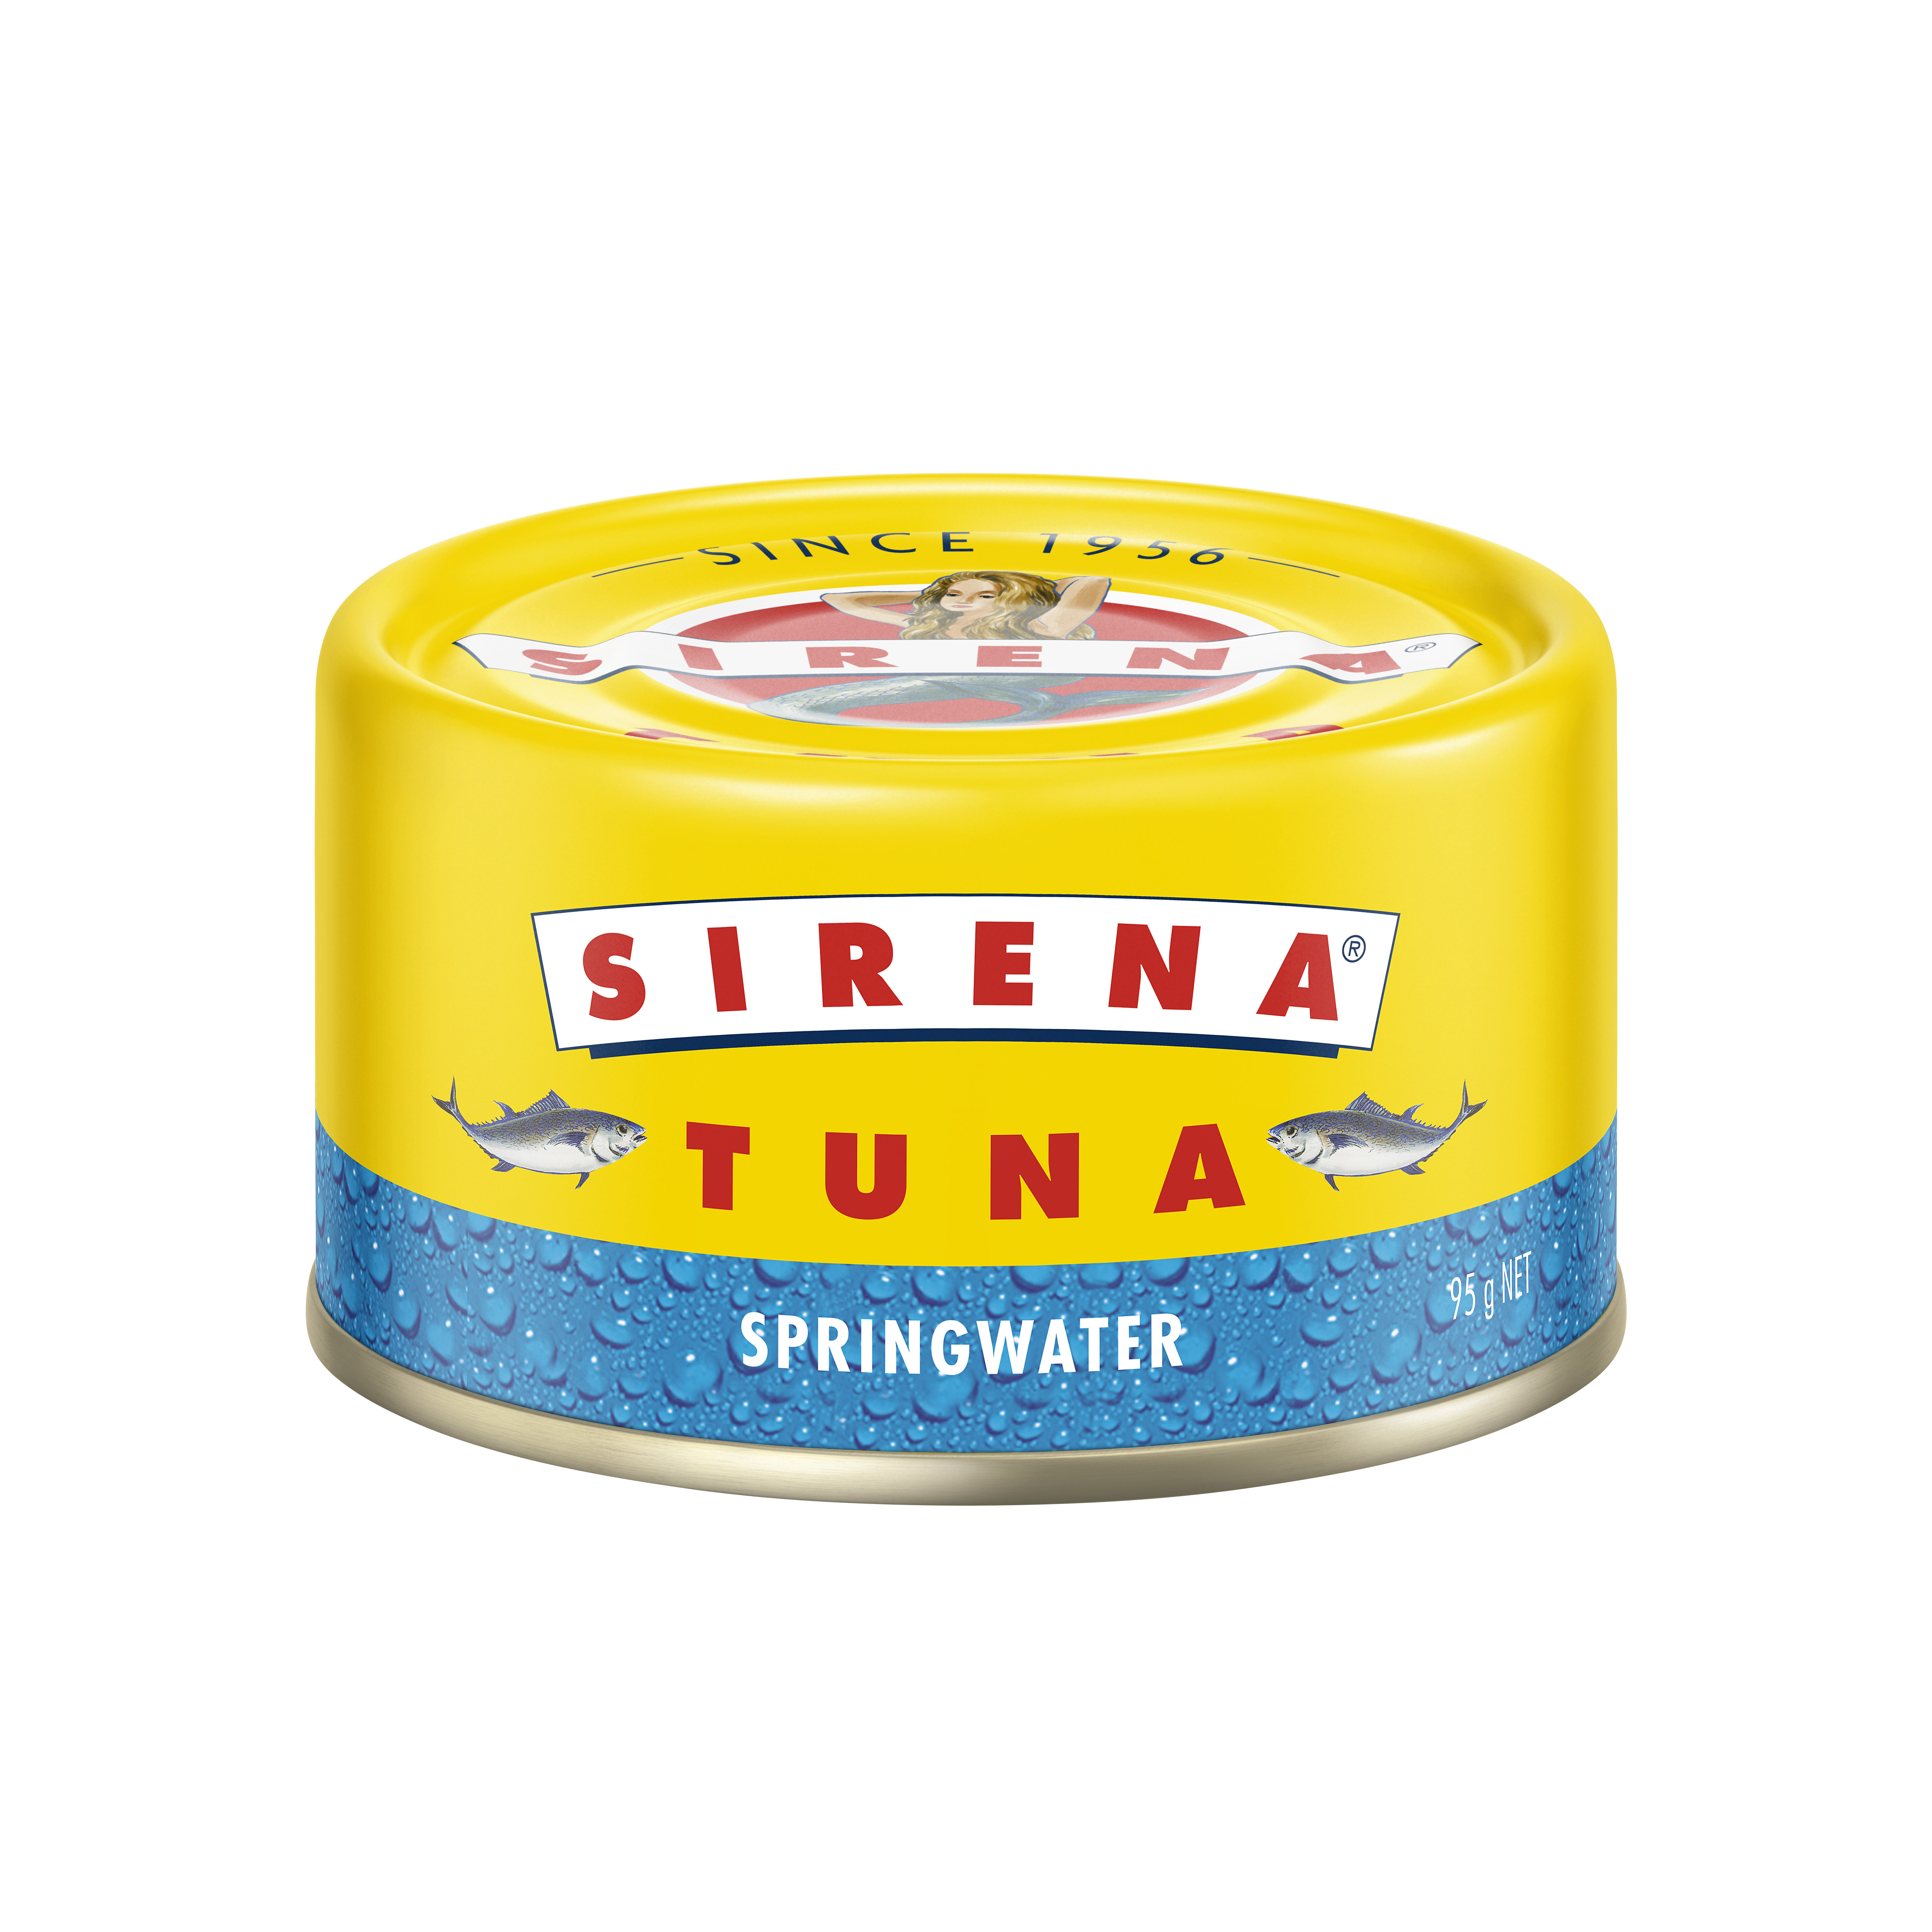 Century Tuna Premium Yellowfin Chunks in Olive Oil - Century Tuna  Philippines